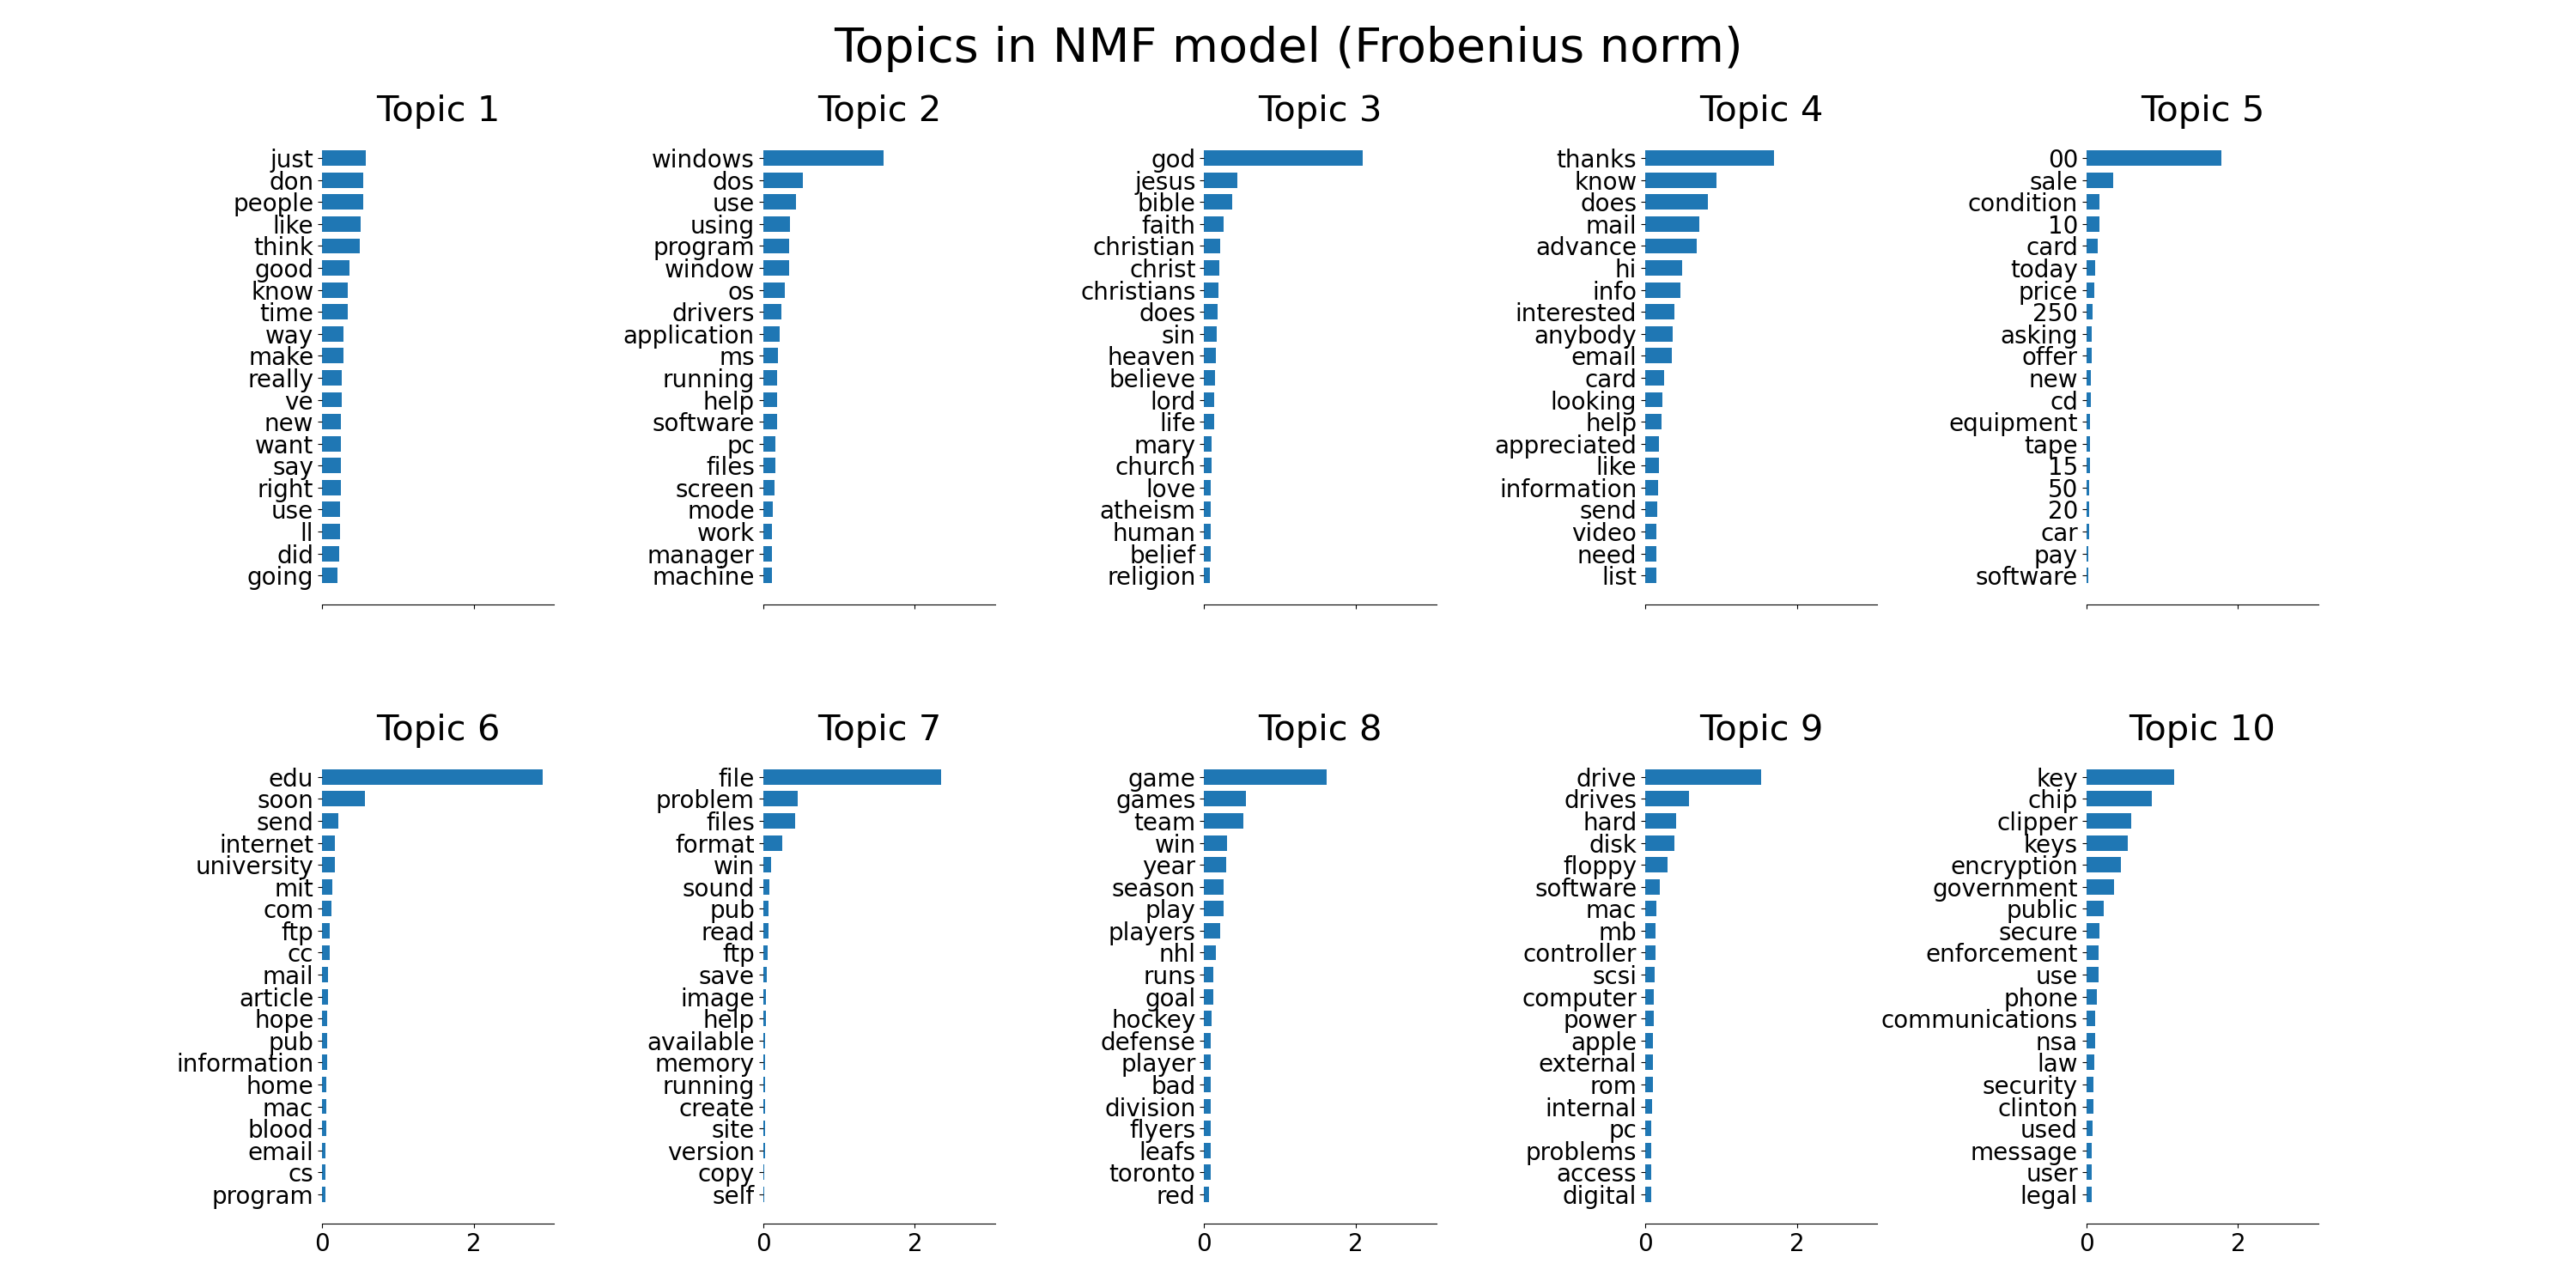 Topics in NMF model (Frobenius norm), Topic 1, Topic 2, Topic 3, Topic 4, Topic 5, Topic 6, Topic 7, Topic 8, Topic 9, Topic 10